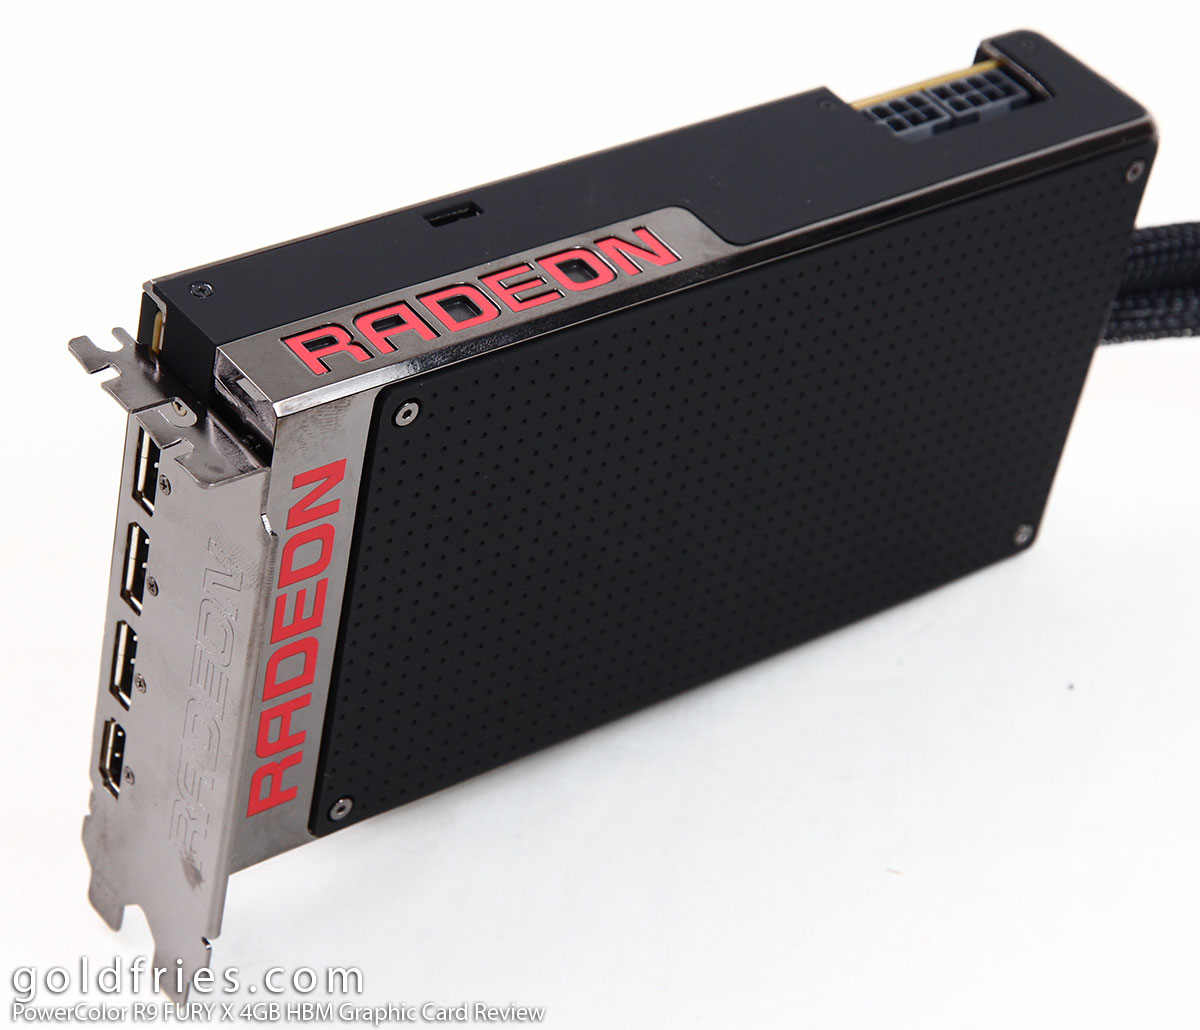 PowerColor R9 FURY X 4GB HBM Graphic Card Review